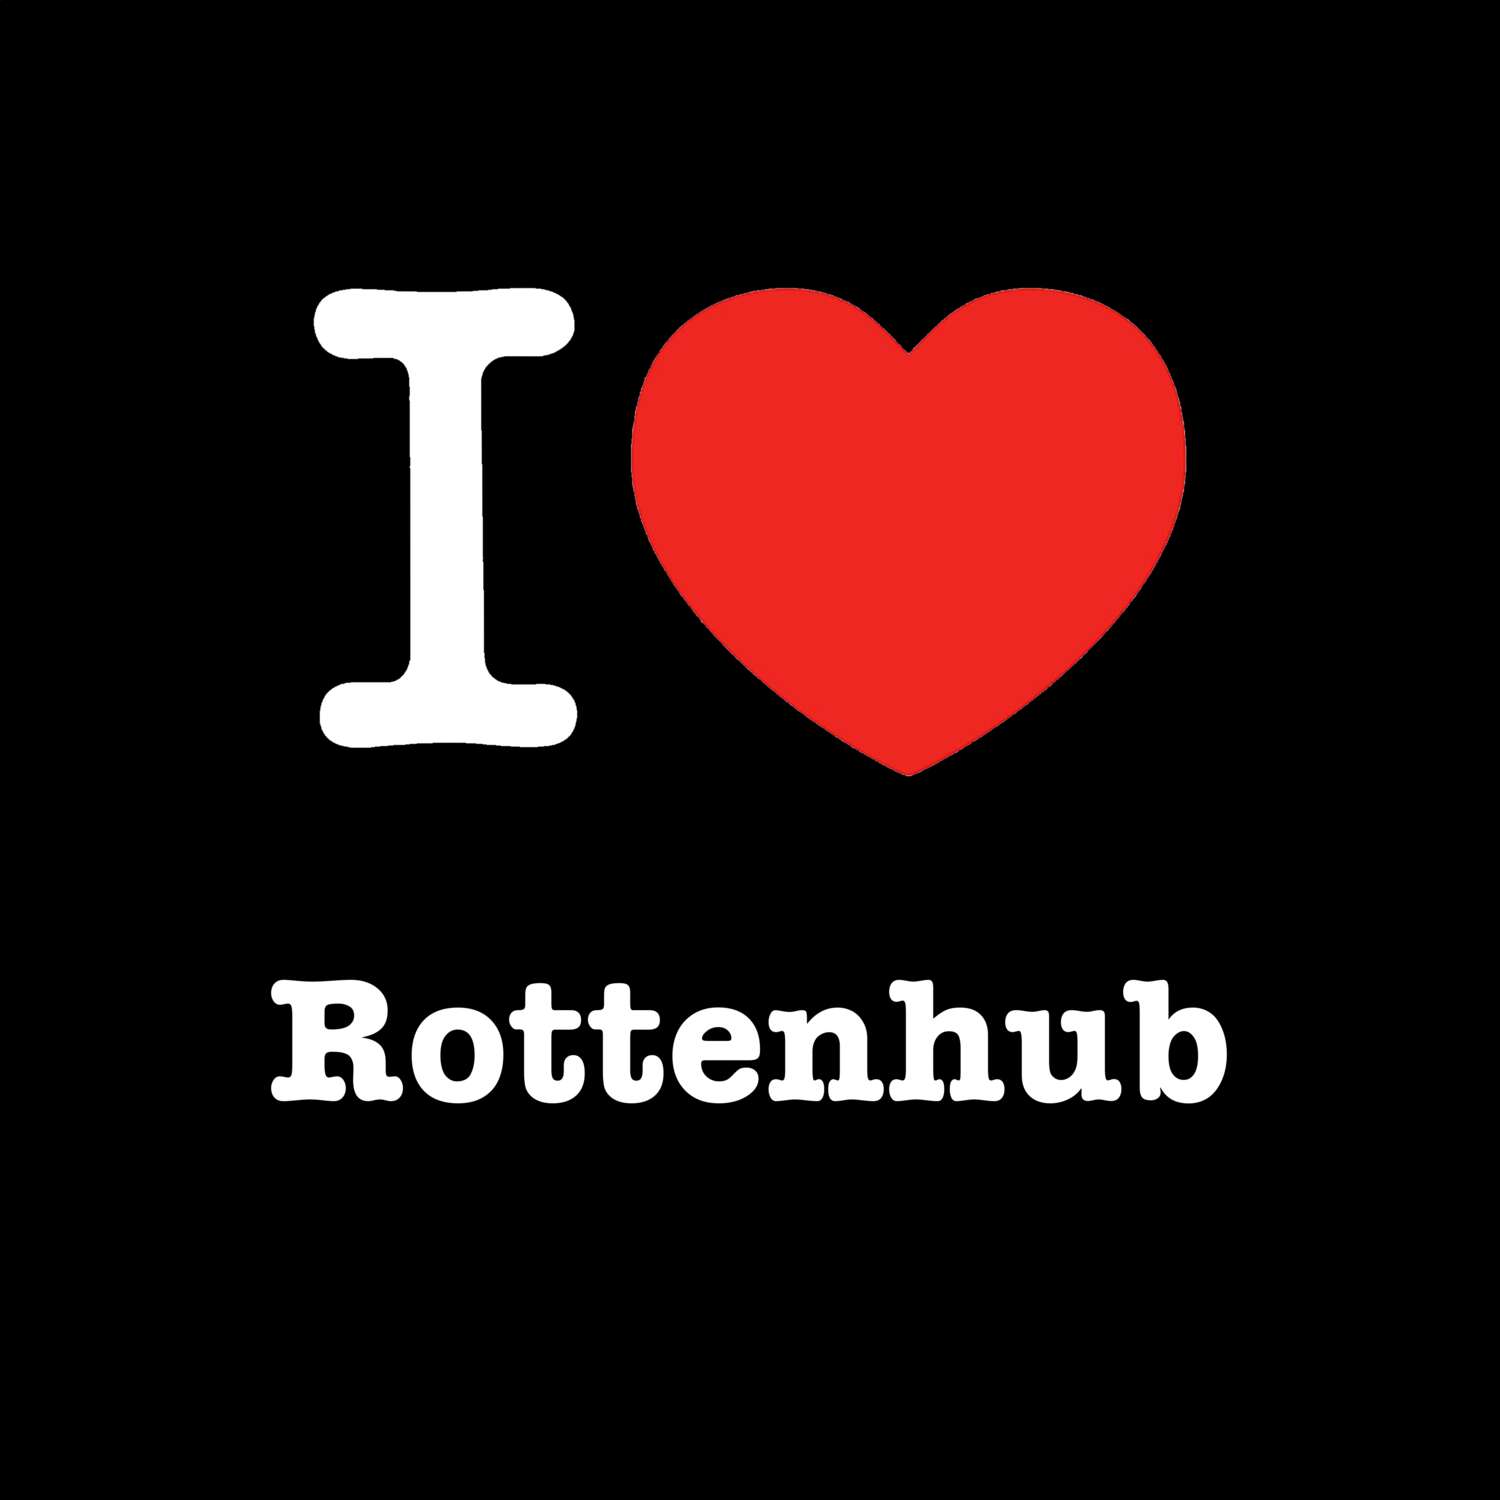 Rottenhub T-Shirt »I love«